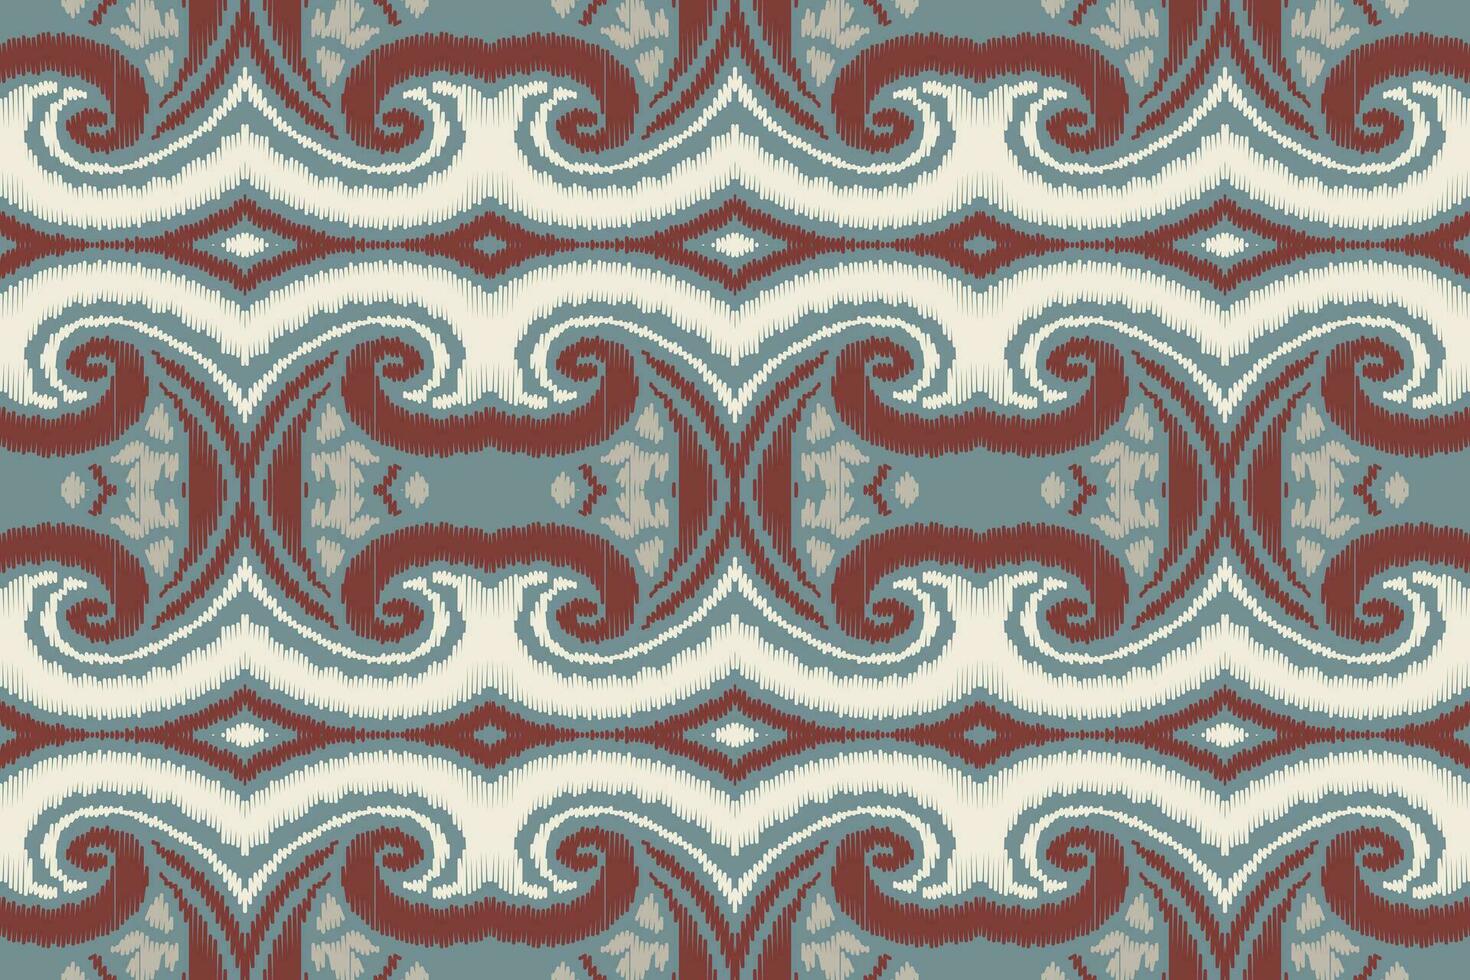 ikat damasco paisley bordado fundo. ikat damasco geométrico étnico oriental padronizar tradicional. ikat asteca estilo abstrato Projeto para impressão textura, tecido, saree, sari, tapete. vetor